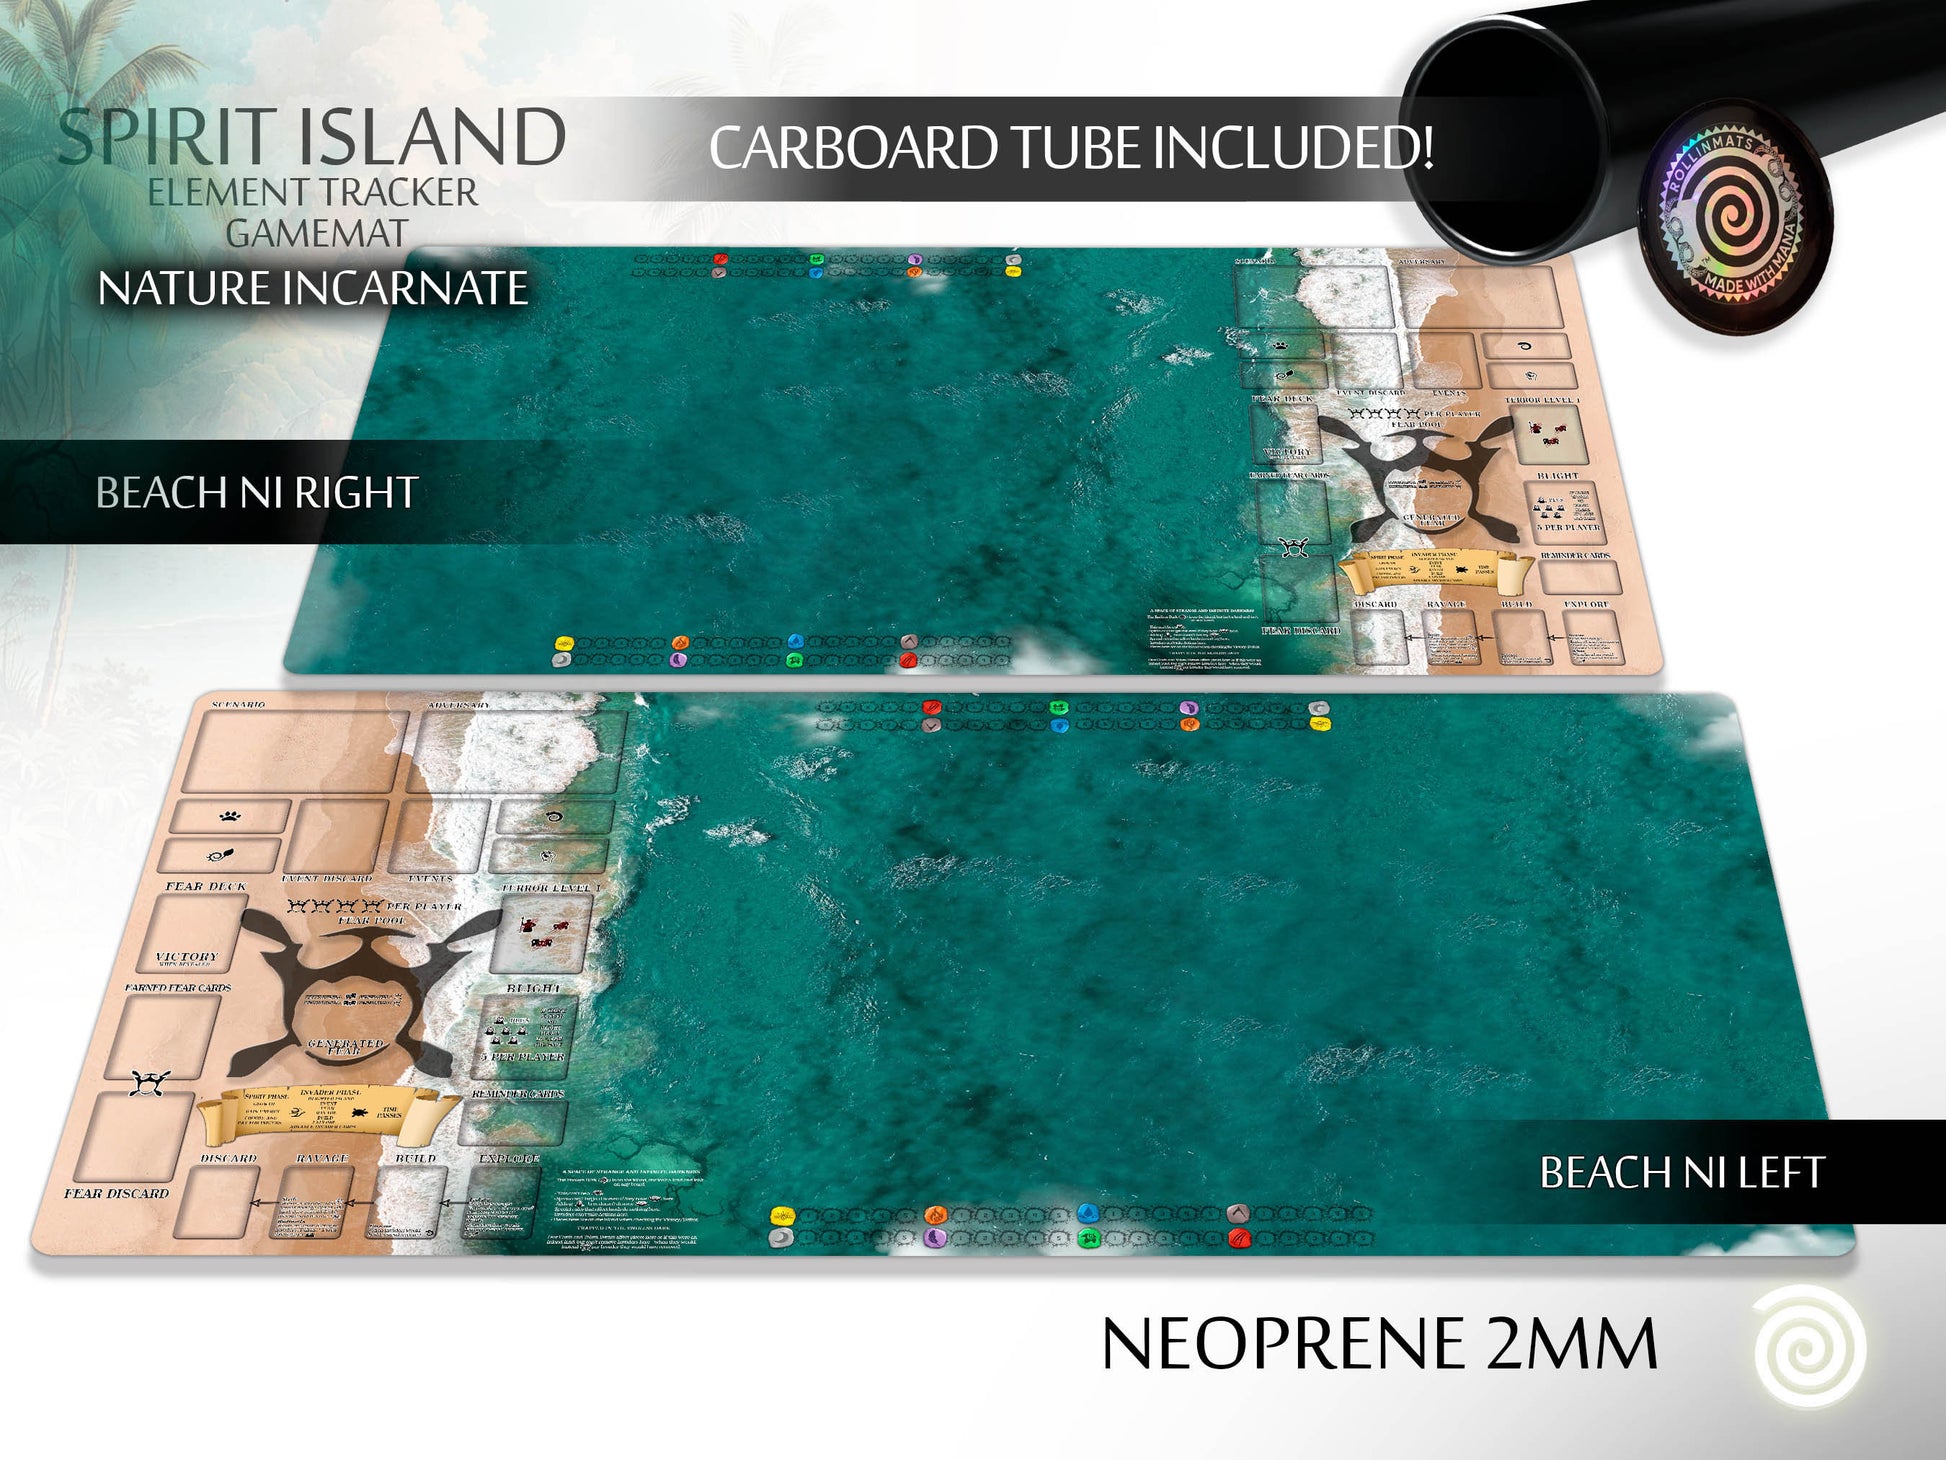 Spirit Island Element Tracker Gamemat